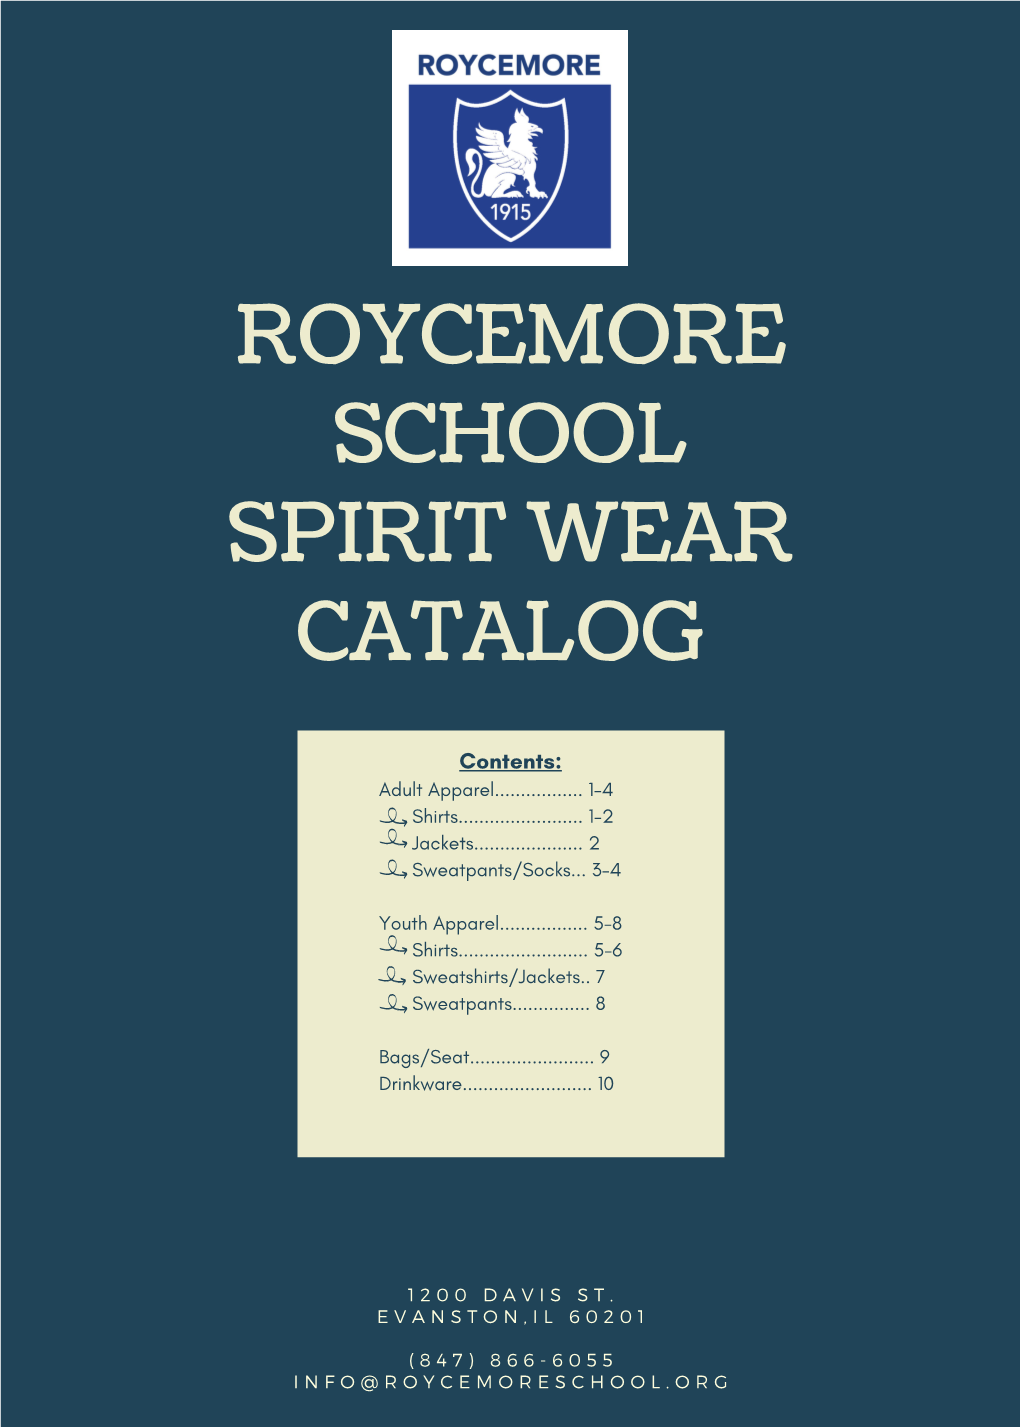 Roycemore School Spirit Wear Catalog